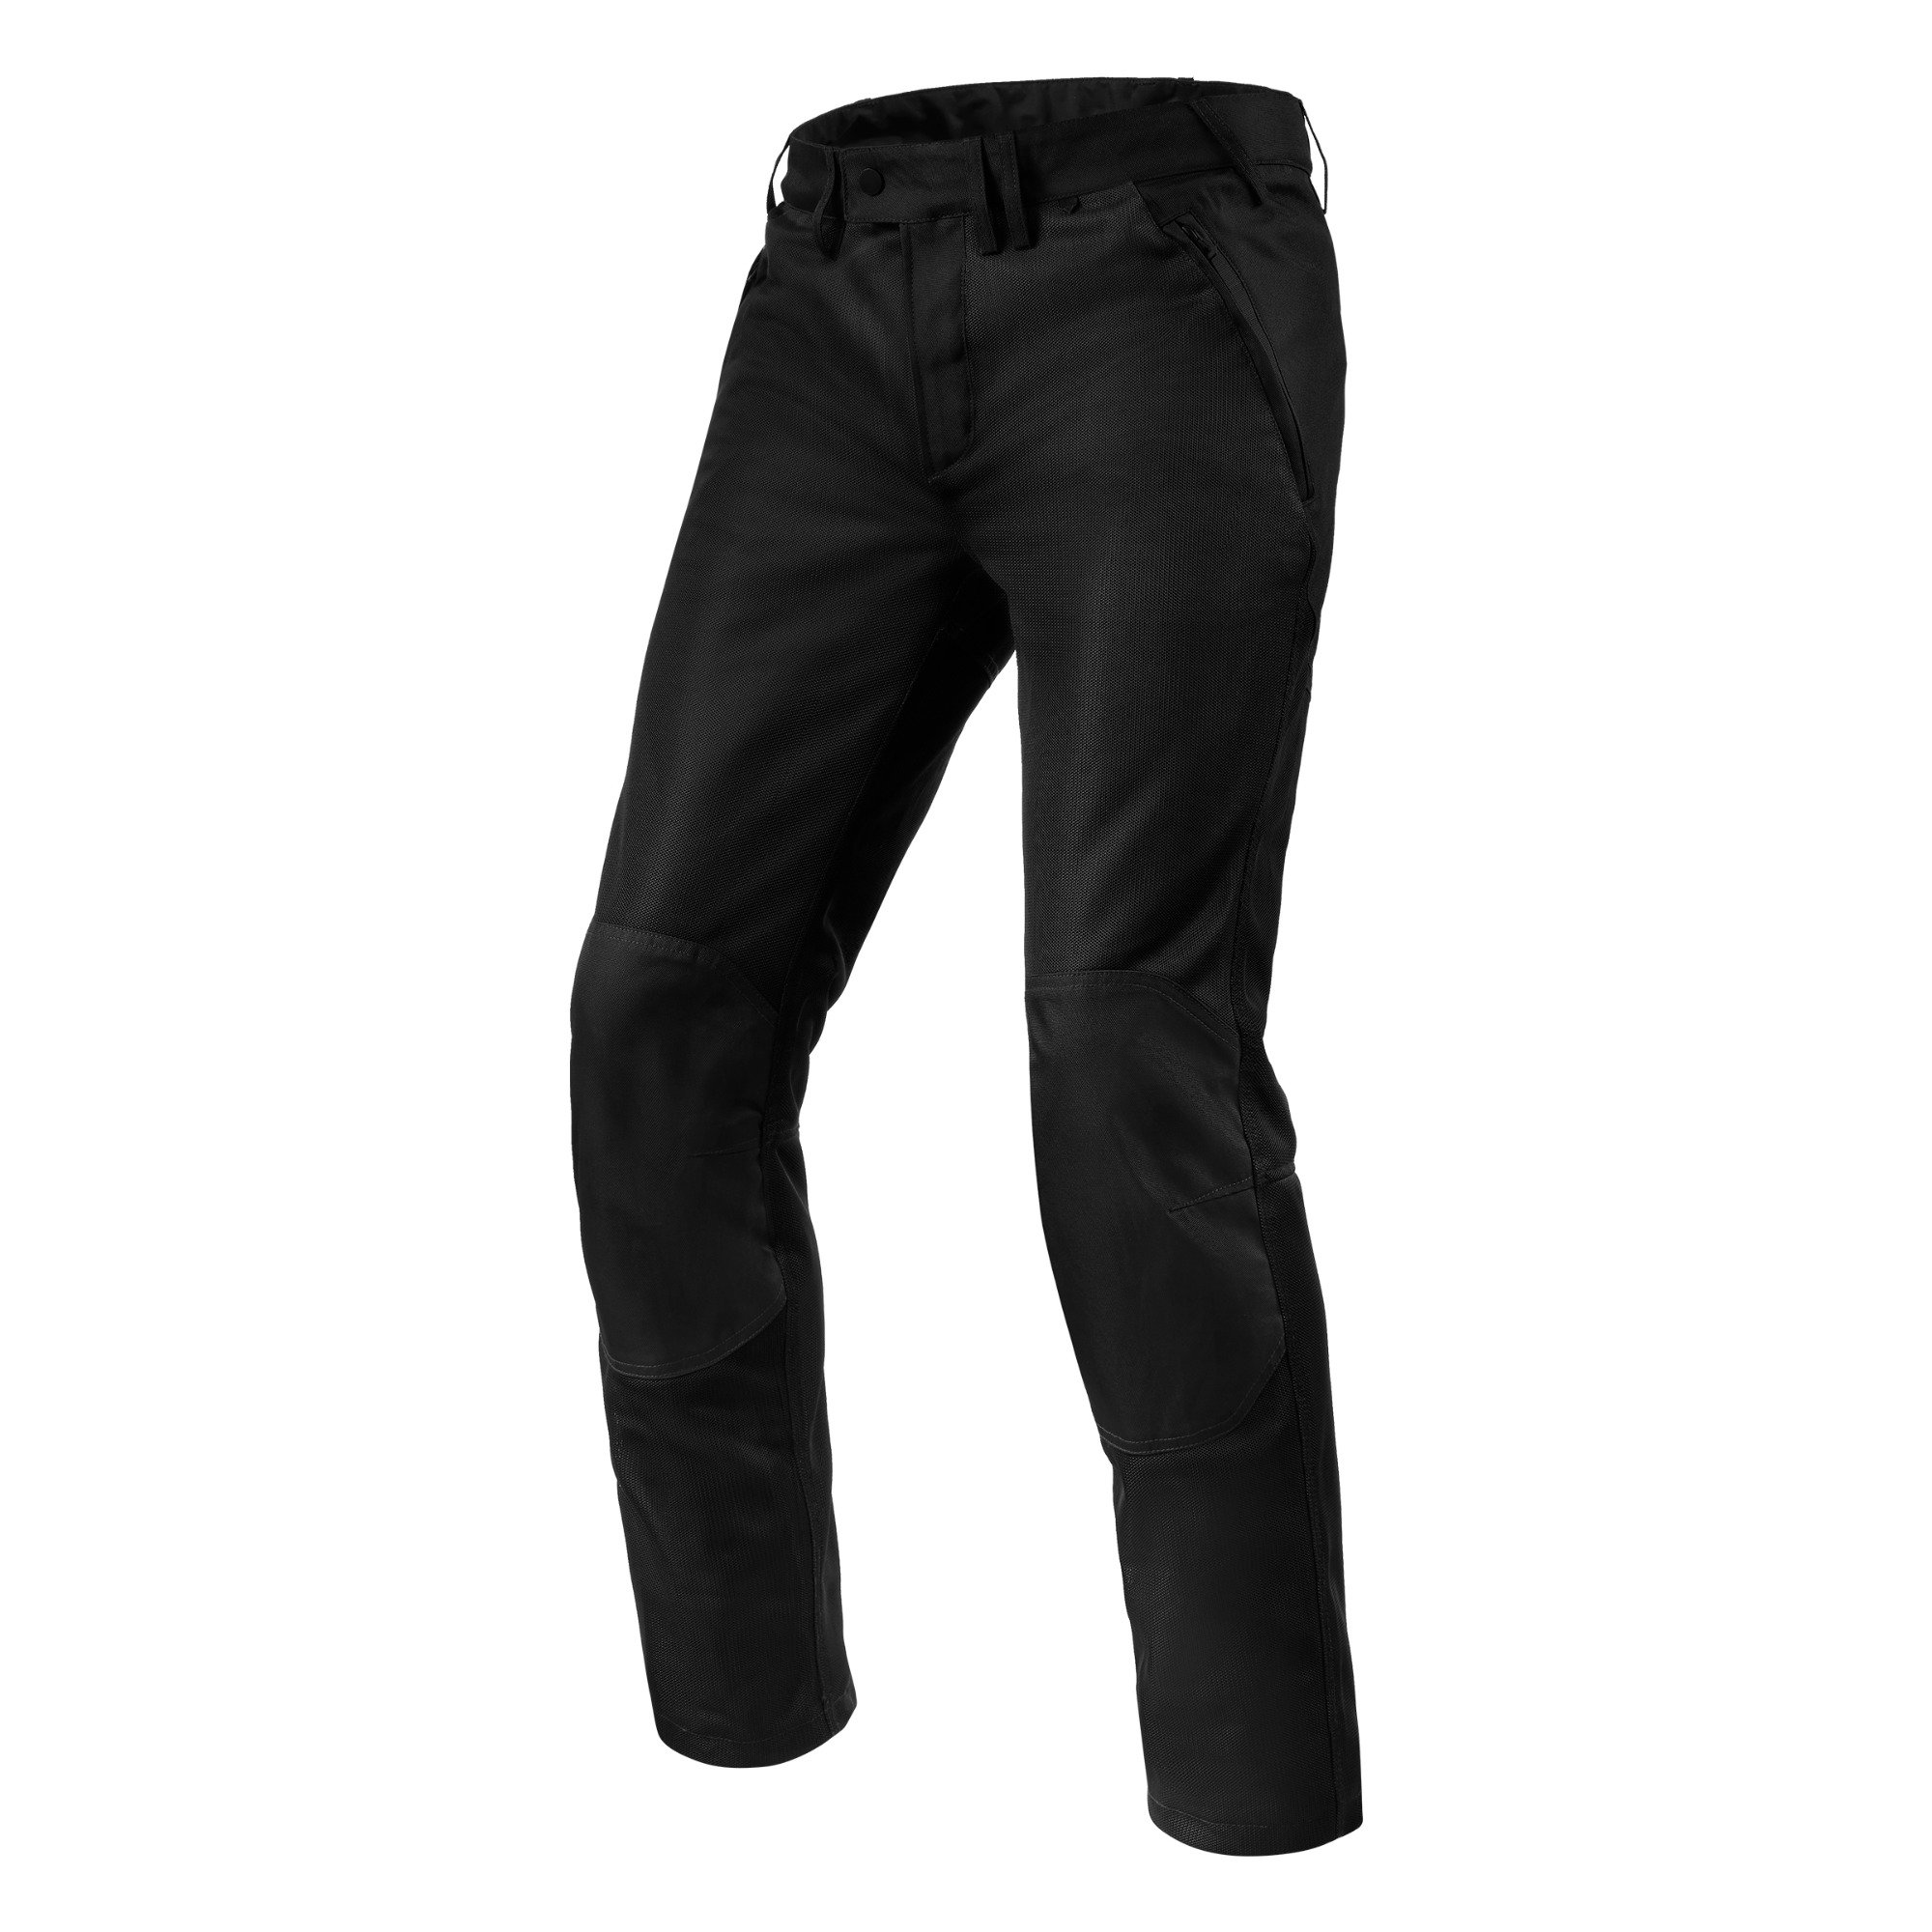 Image of REV'IT! Pants Eclipse 2 Black Long Motorcycle Pants Size 2XL ID 8700001368681